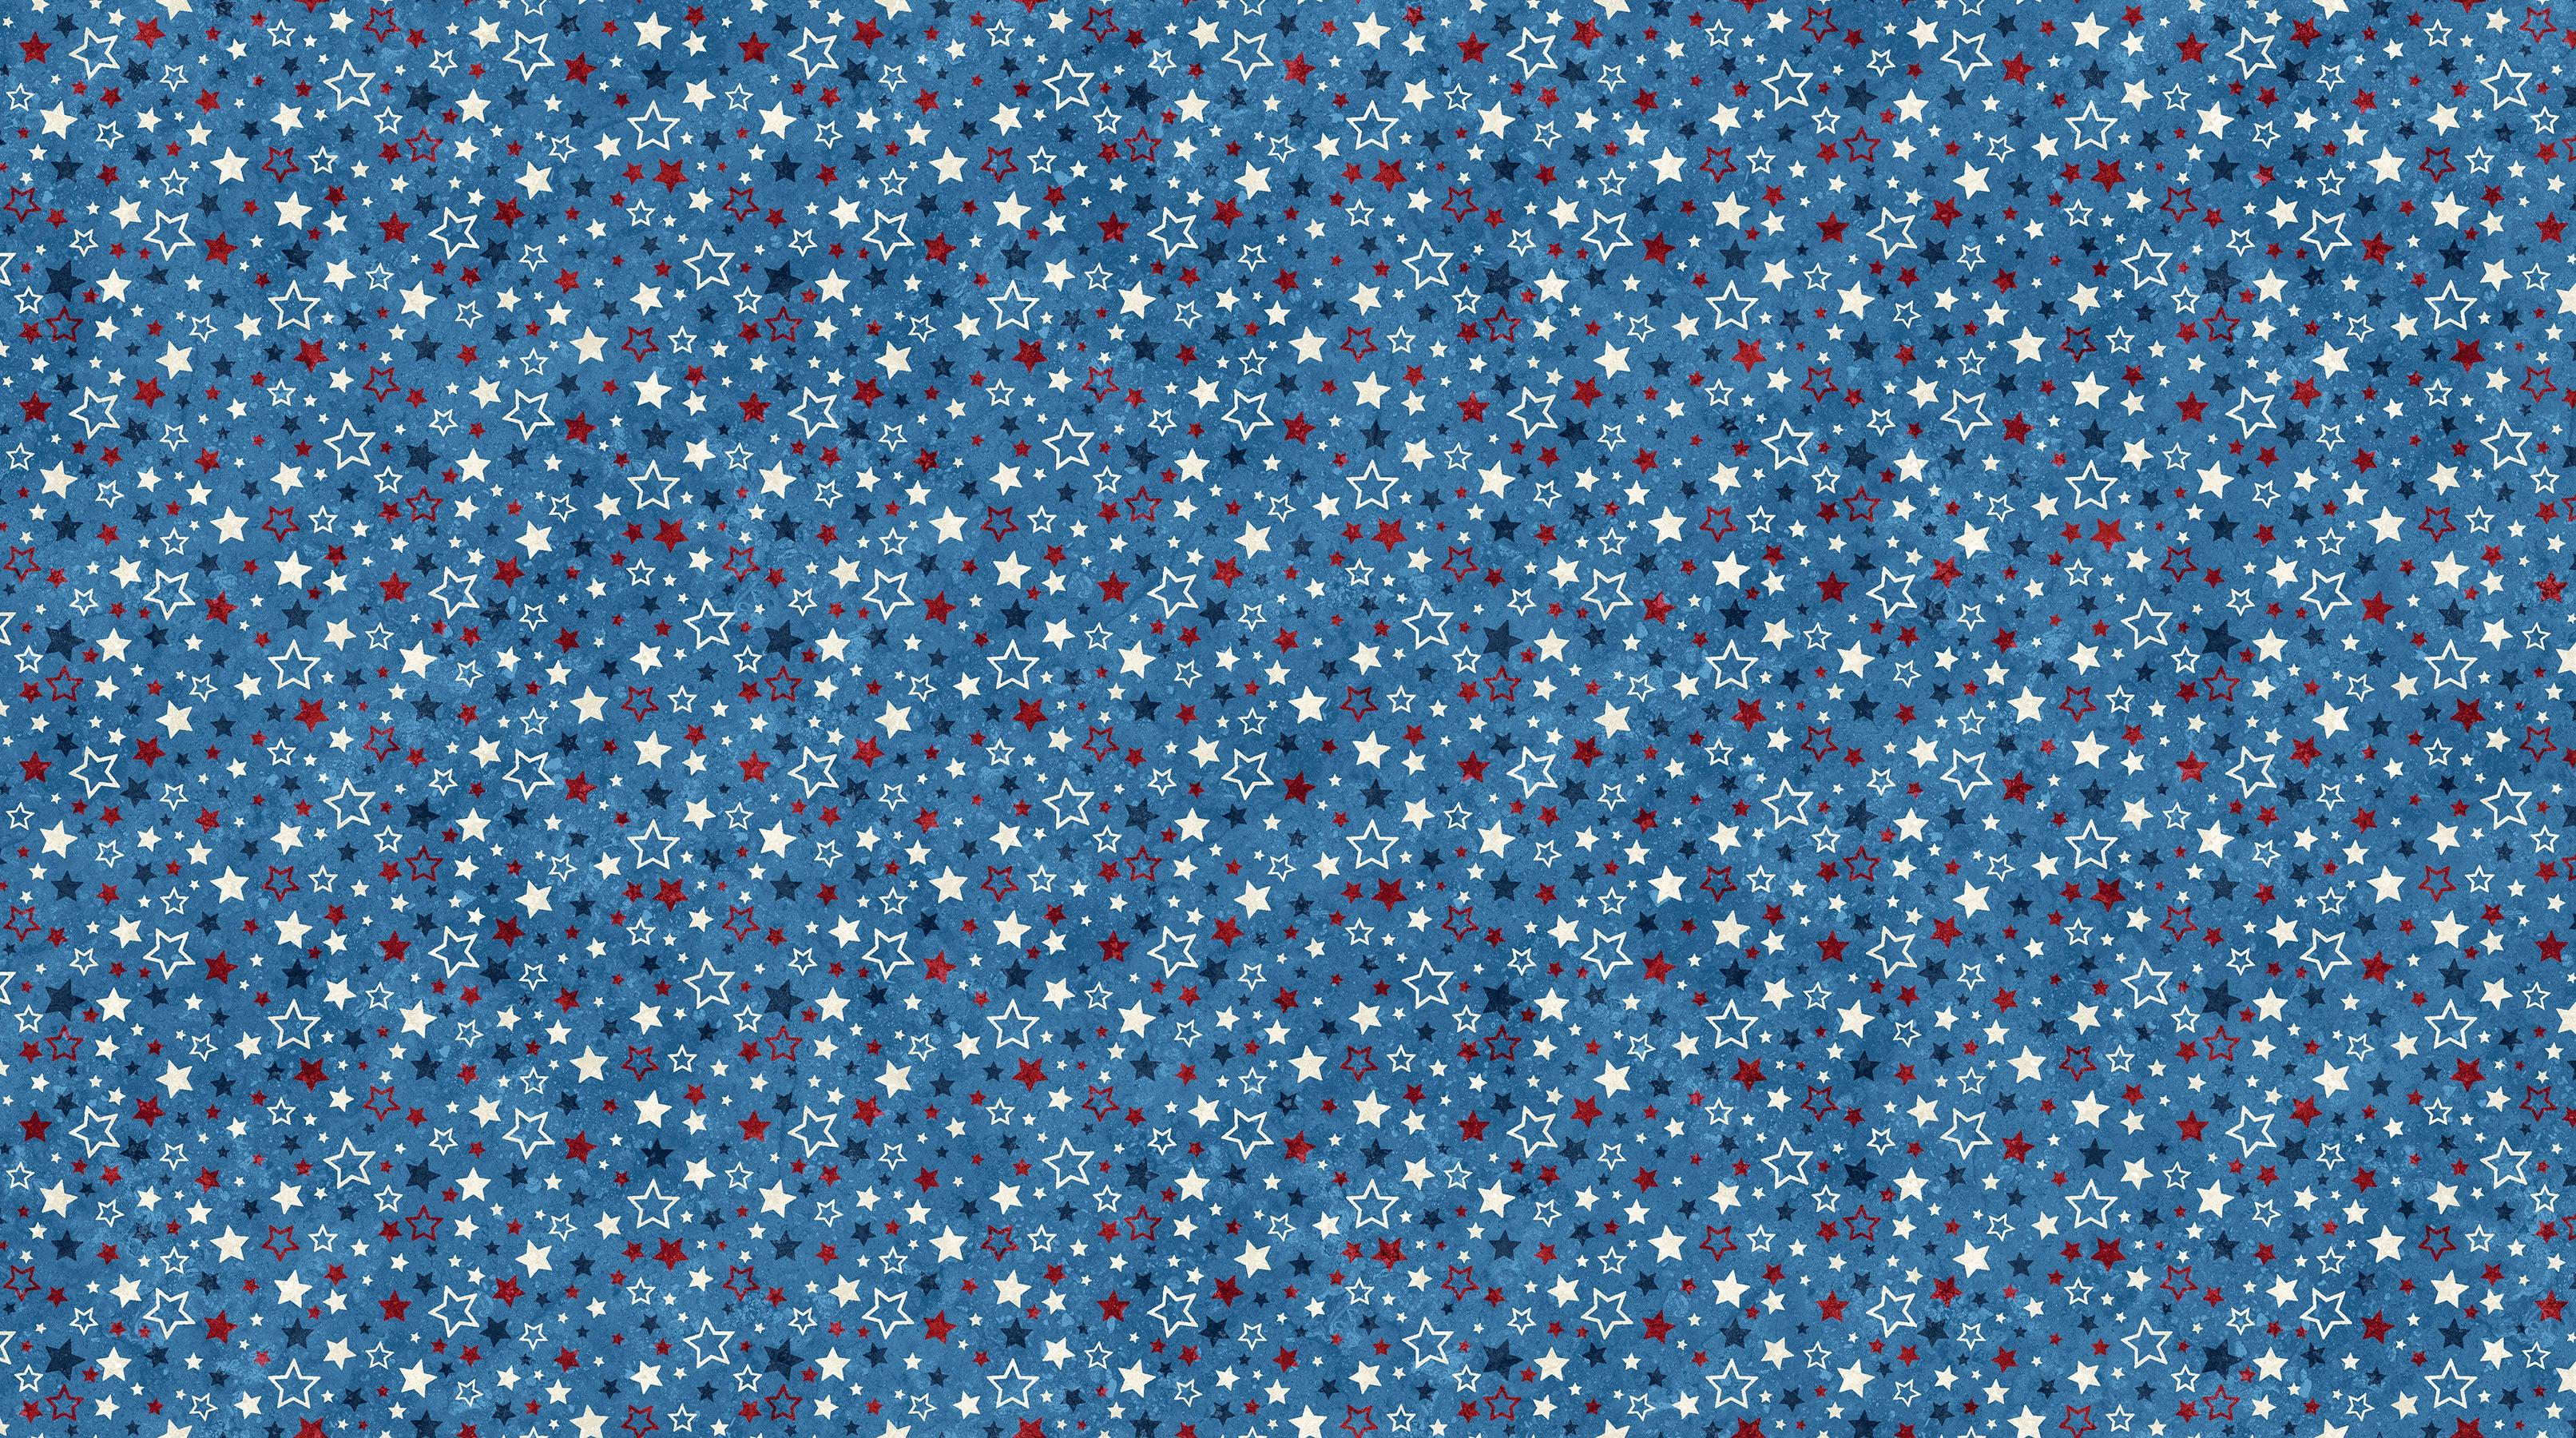 Stars and Stripes 12 Stonehenge Blue Multi Stars Fabric-Northcott Fabrics-My Favorite Quilt Store